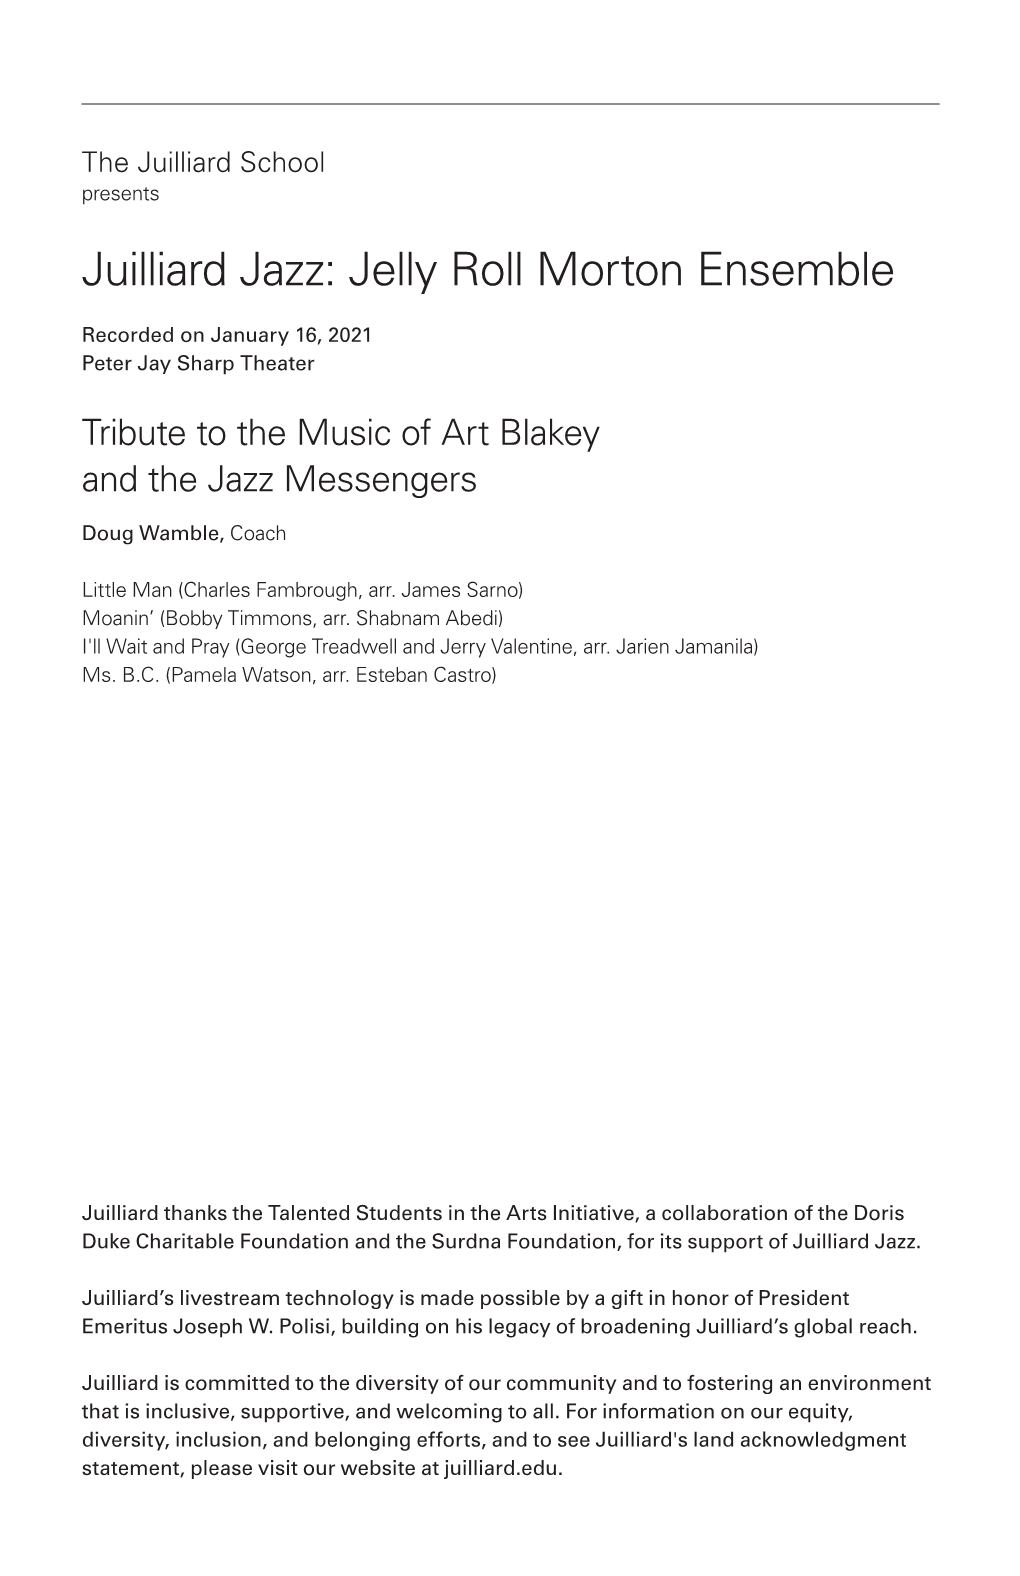 Juilliard Jazz: Jelly Roll Morton Ensemble